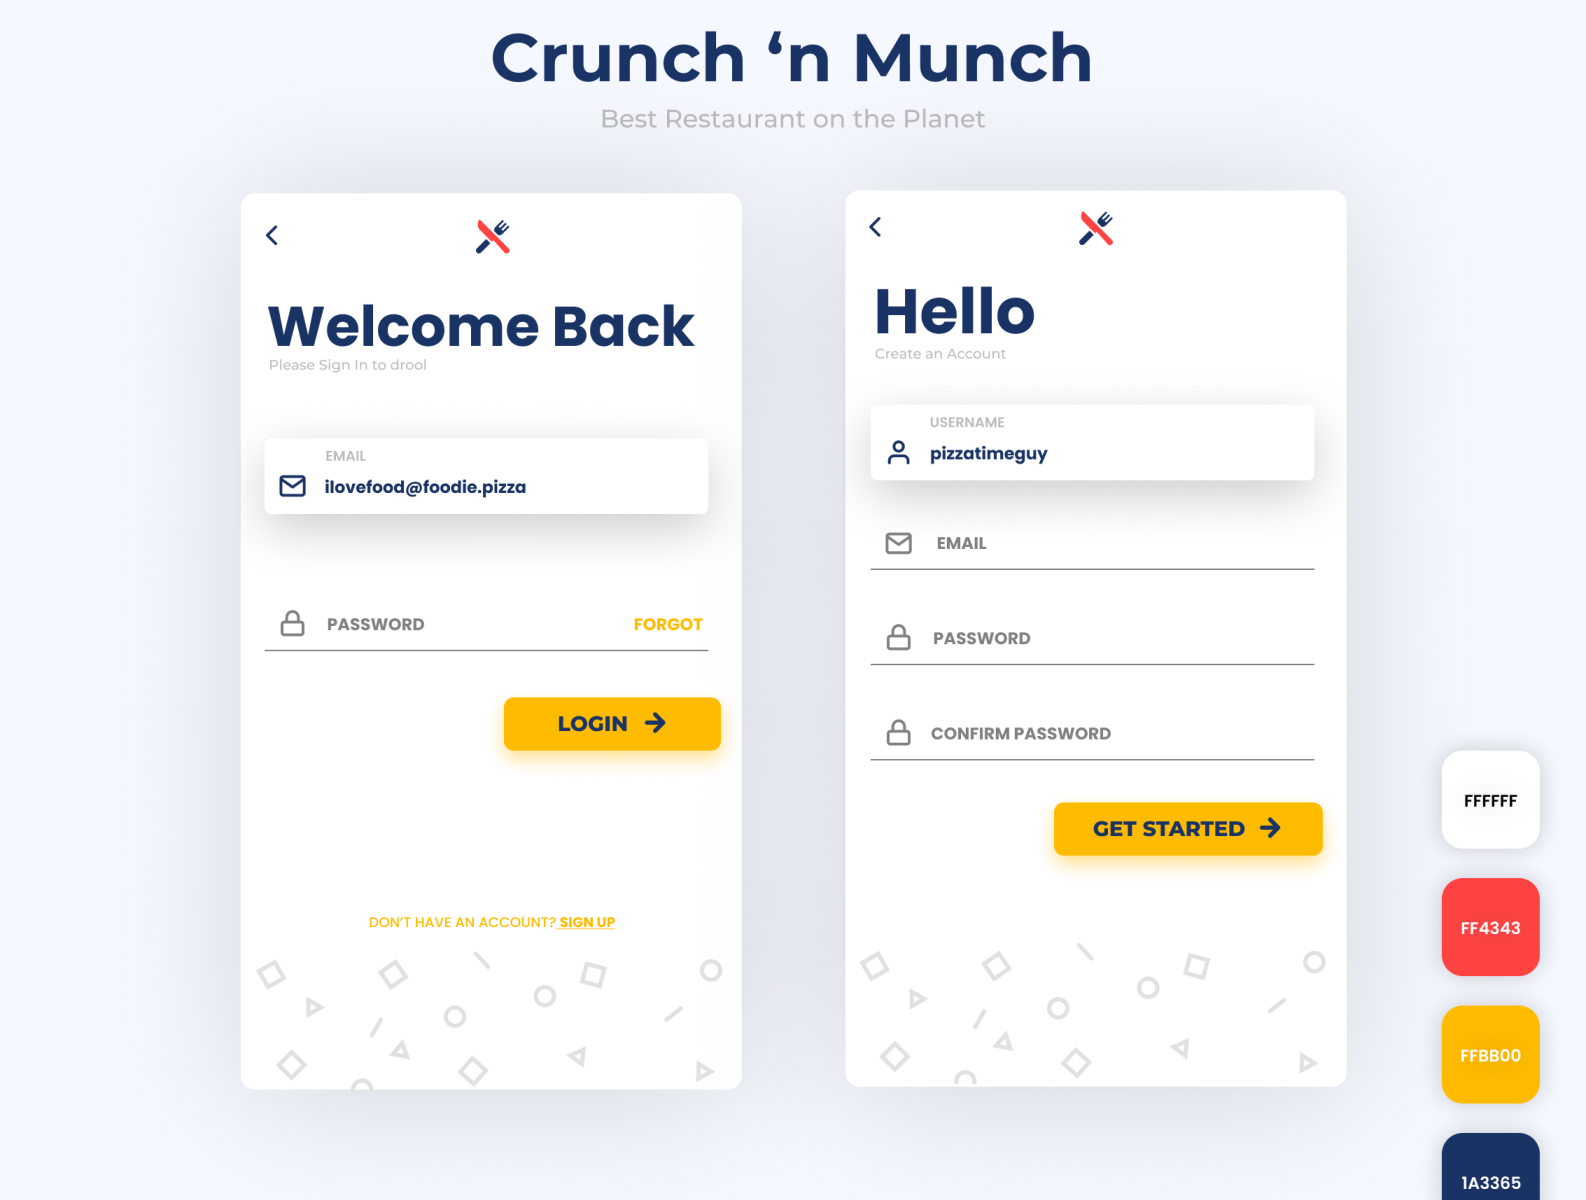 Crunch 'n Munch - Restaurant App Login Screen by Tk Vishal on Dribbble